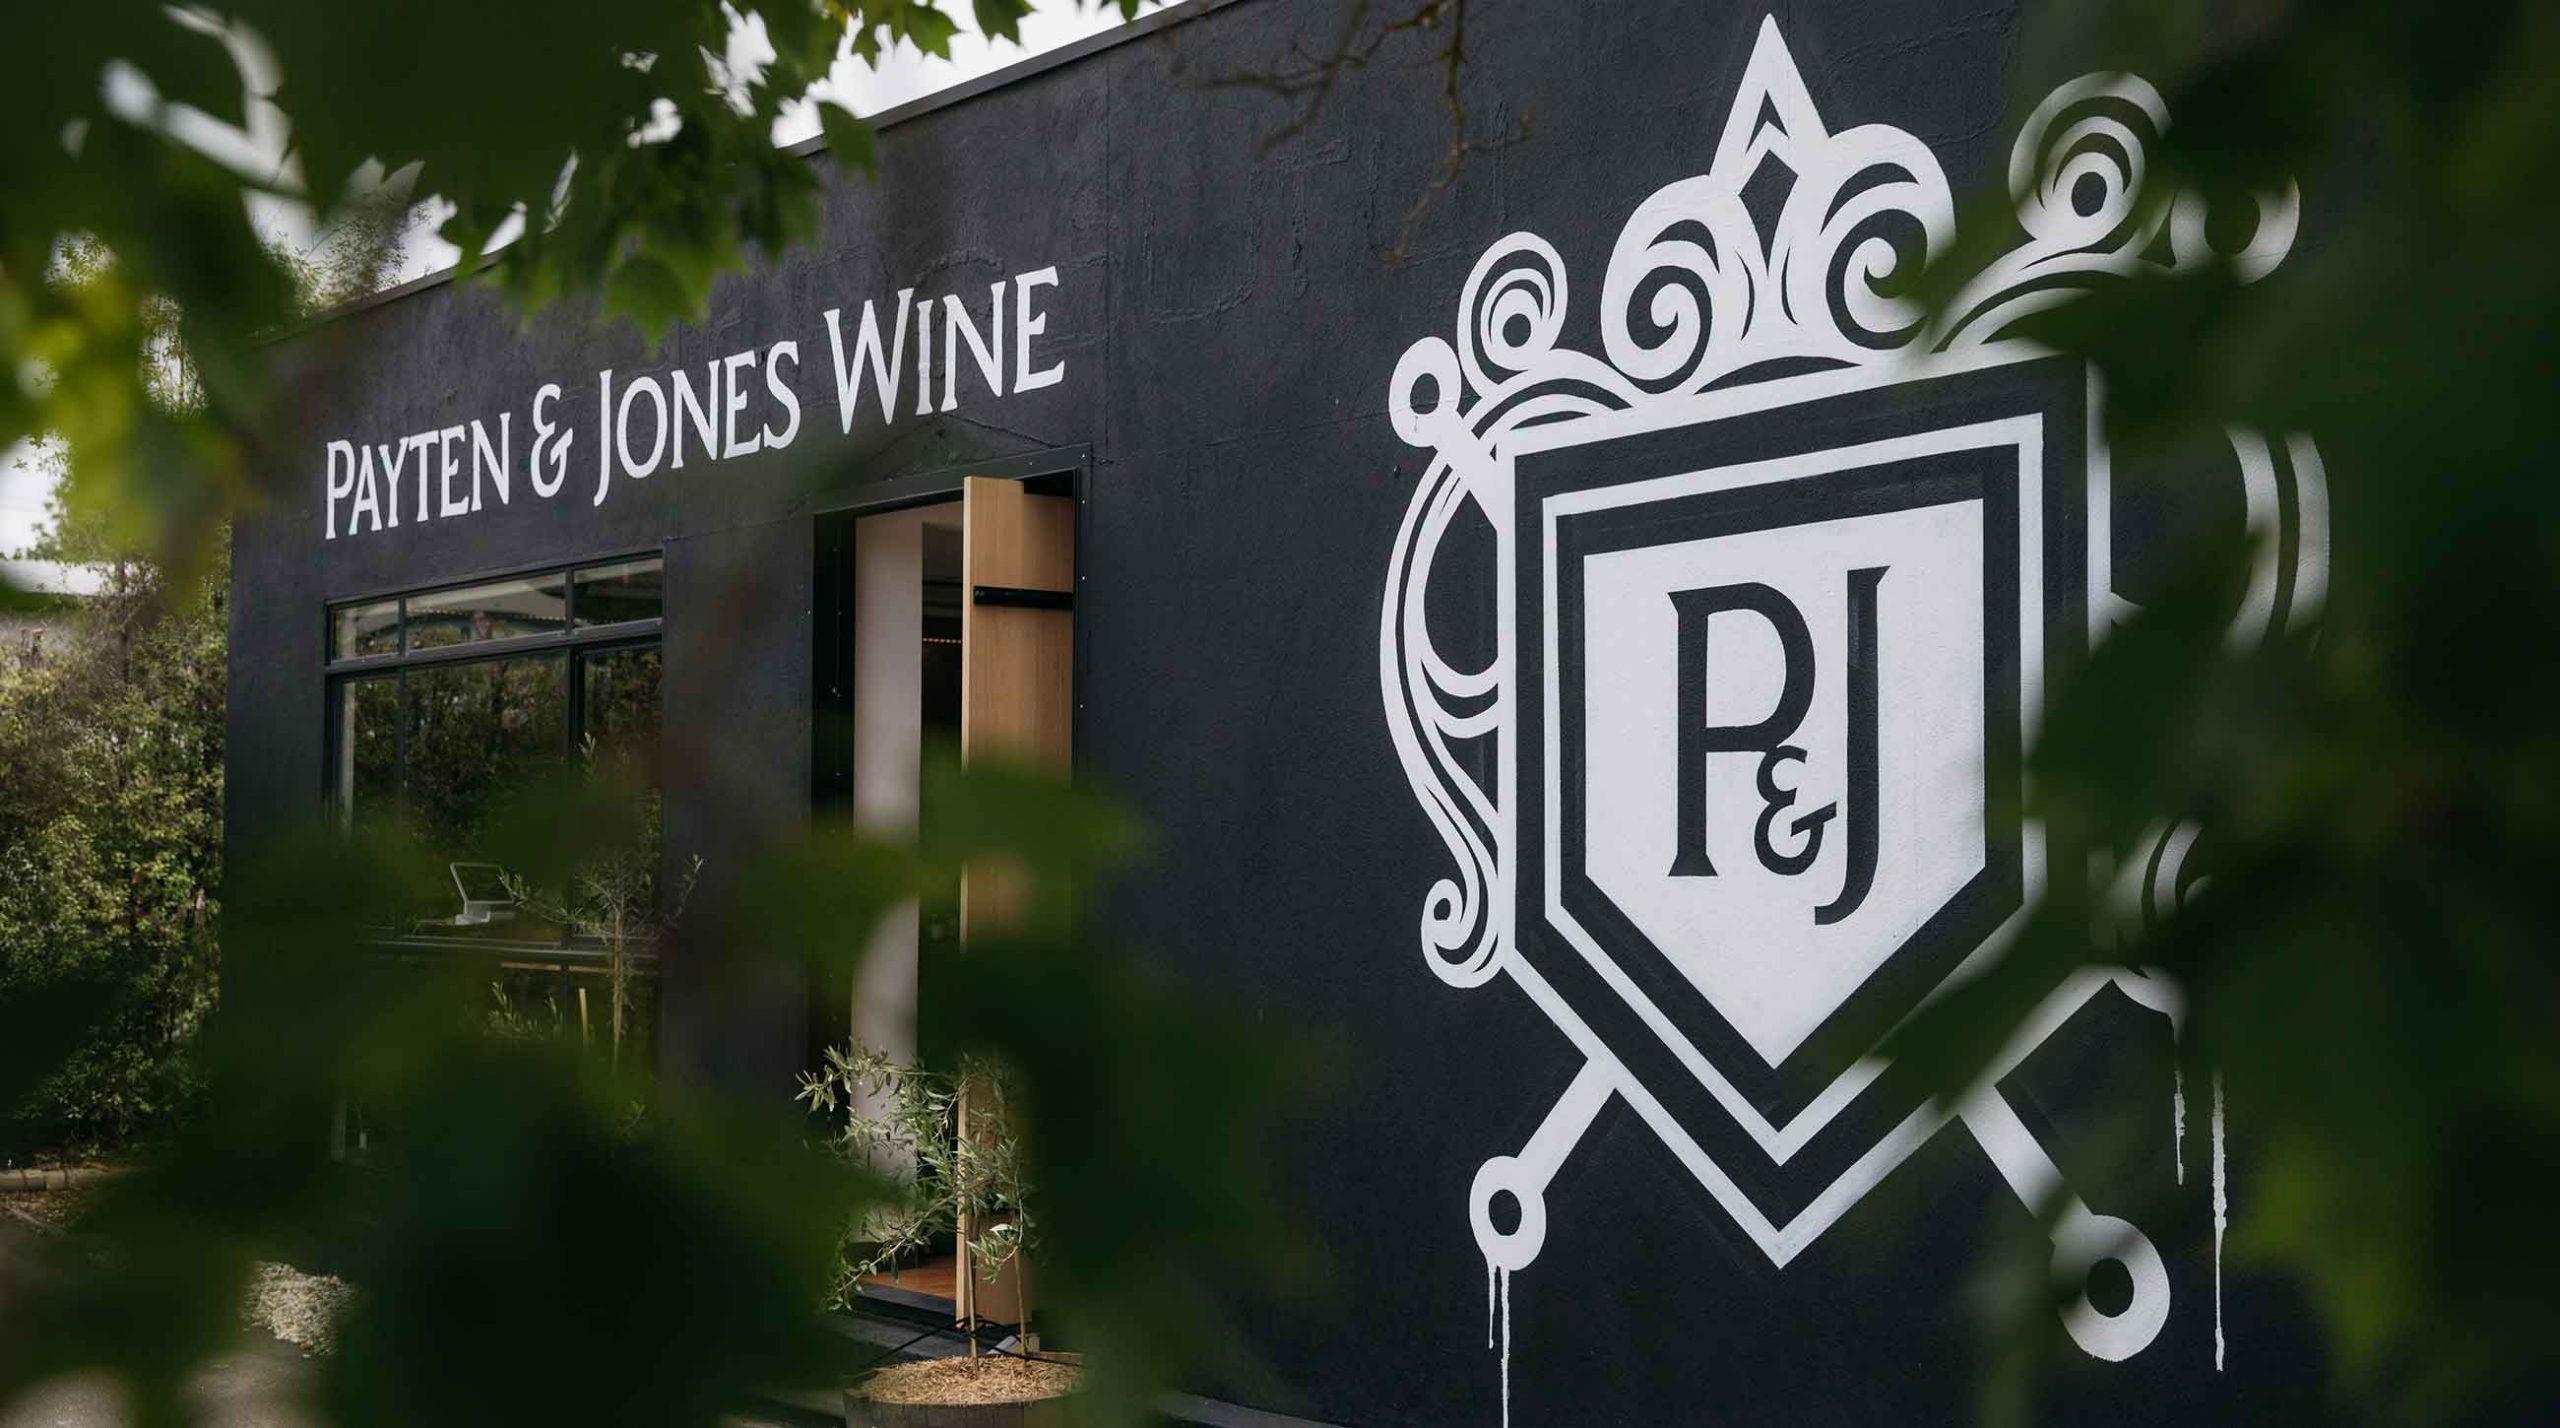 Payten & Jones Wines signage and branding by Sonsie Studios.